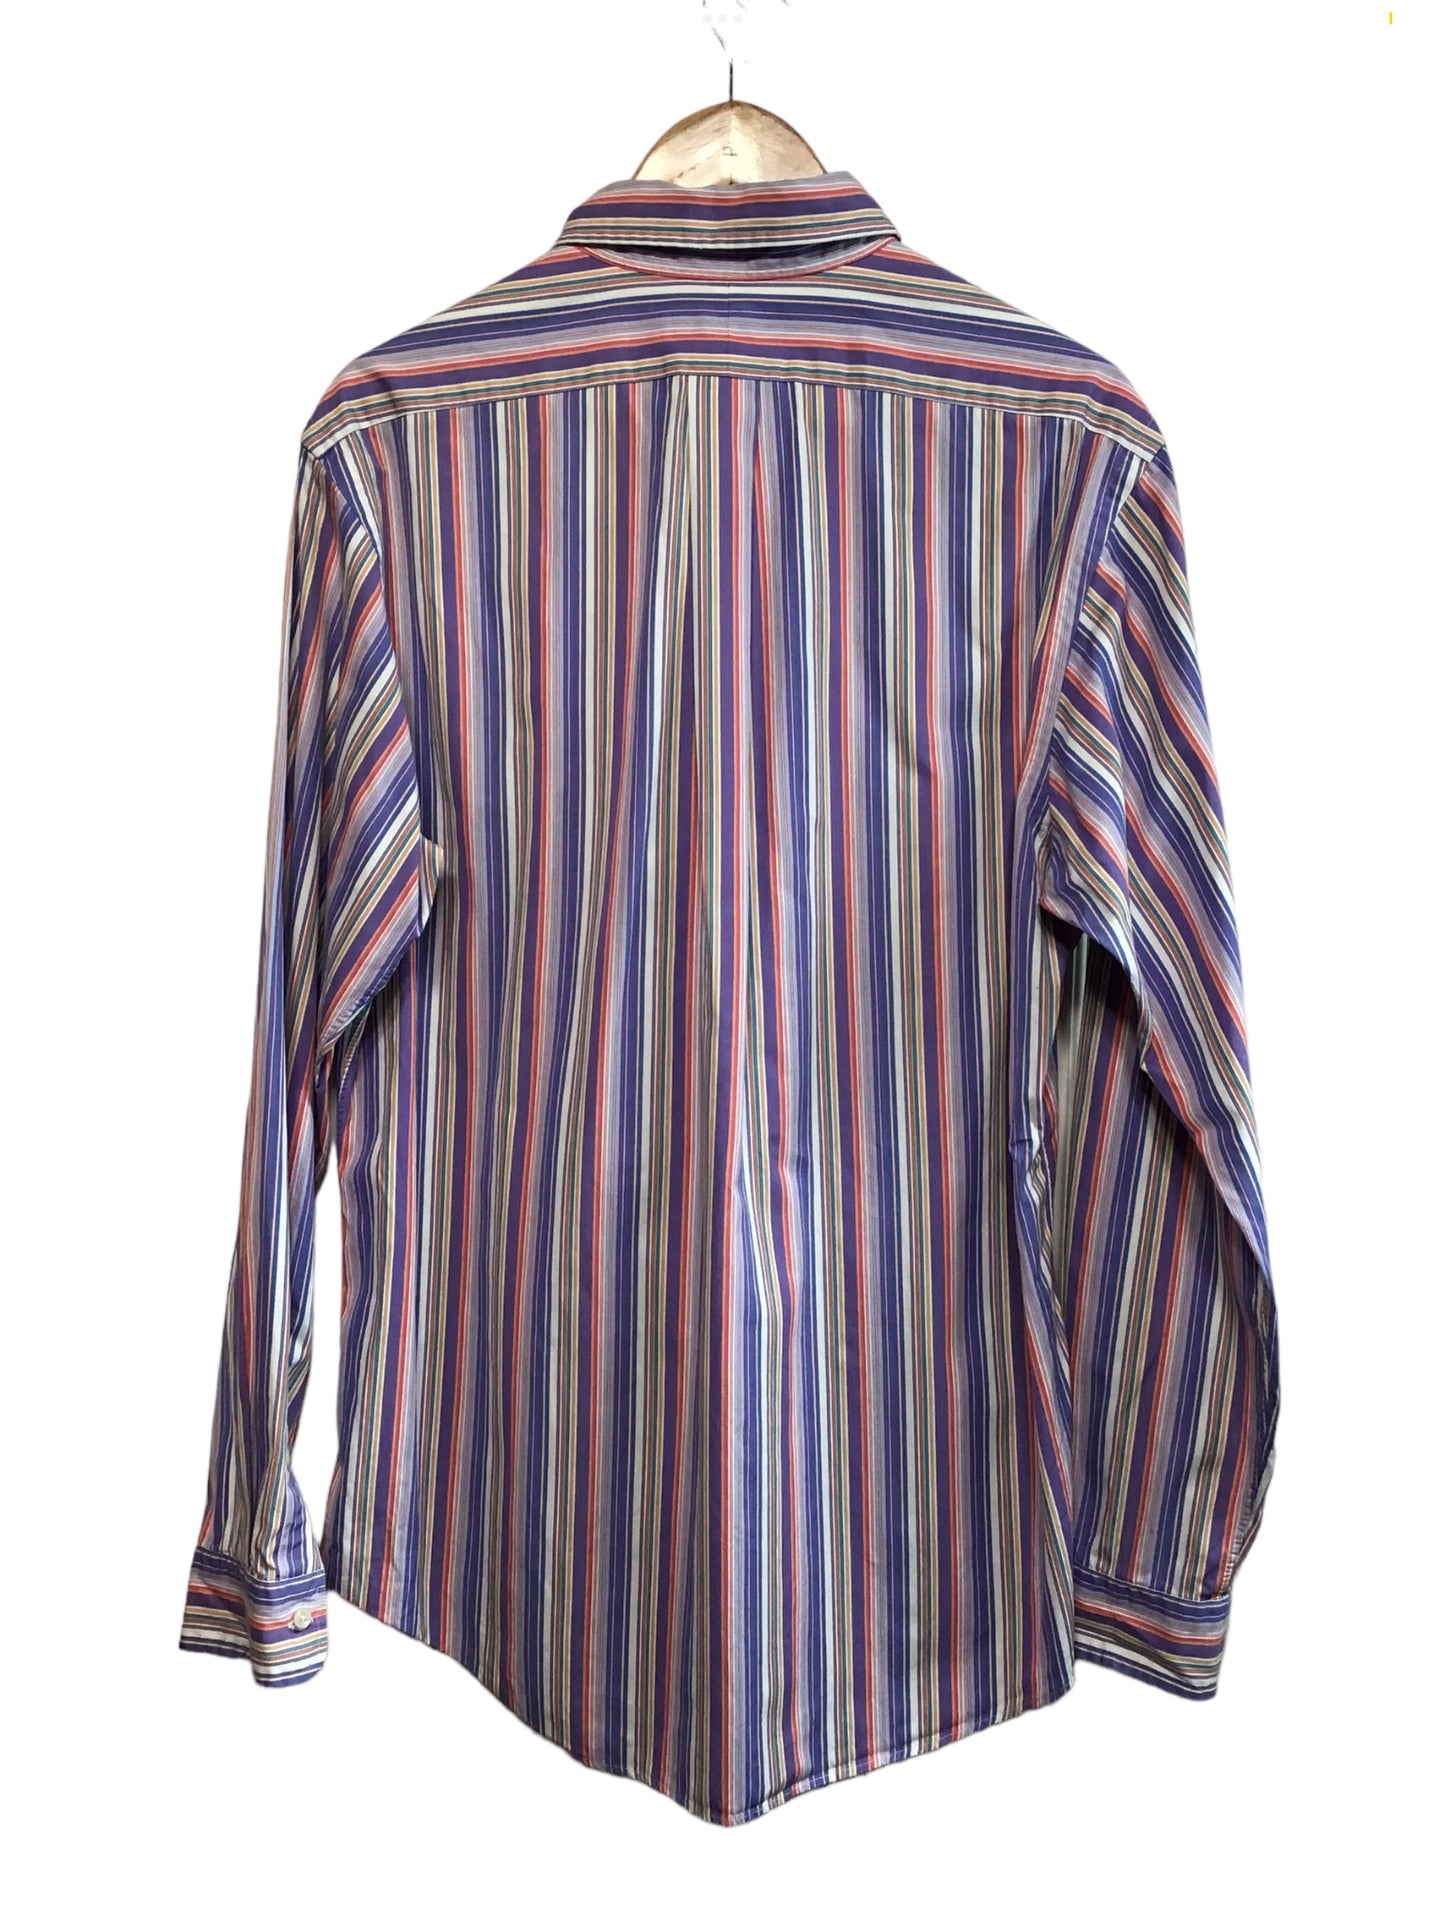 Polo Ralph Lauren Striped Shirt (Size L)